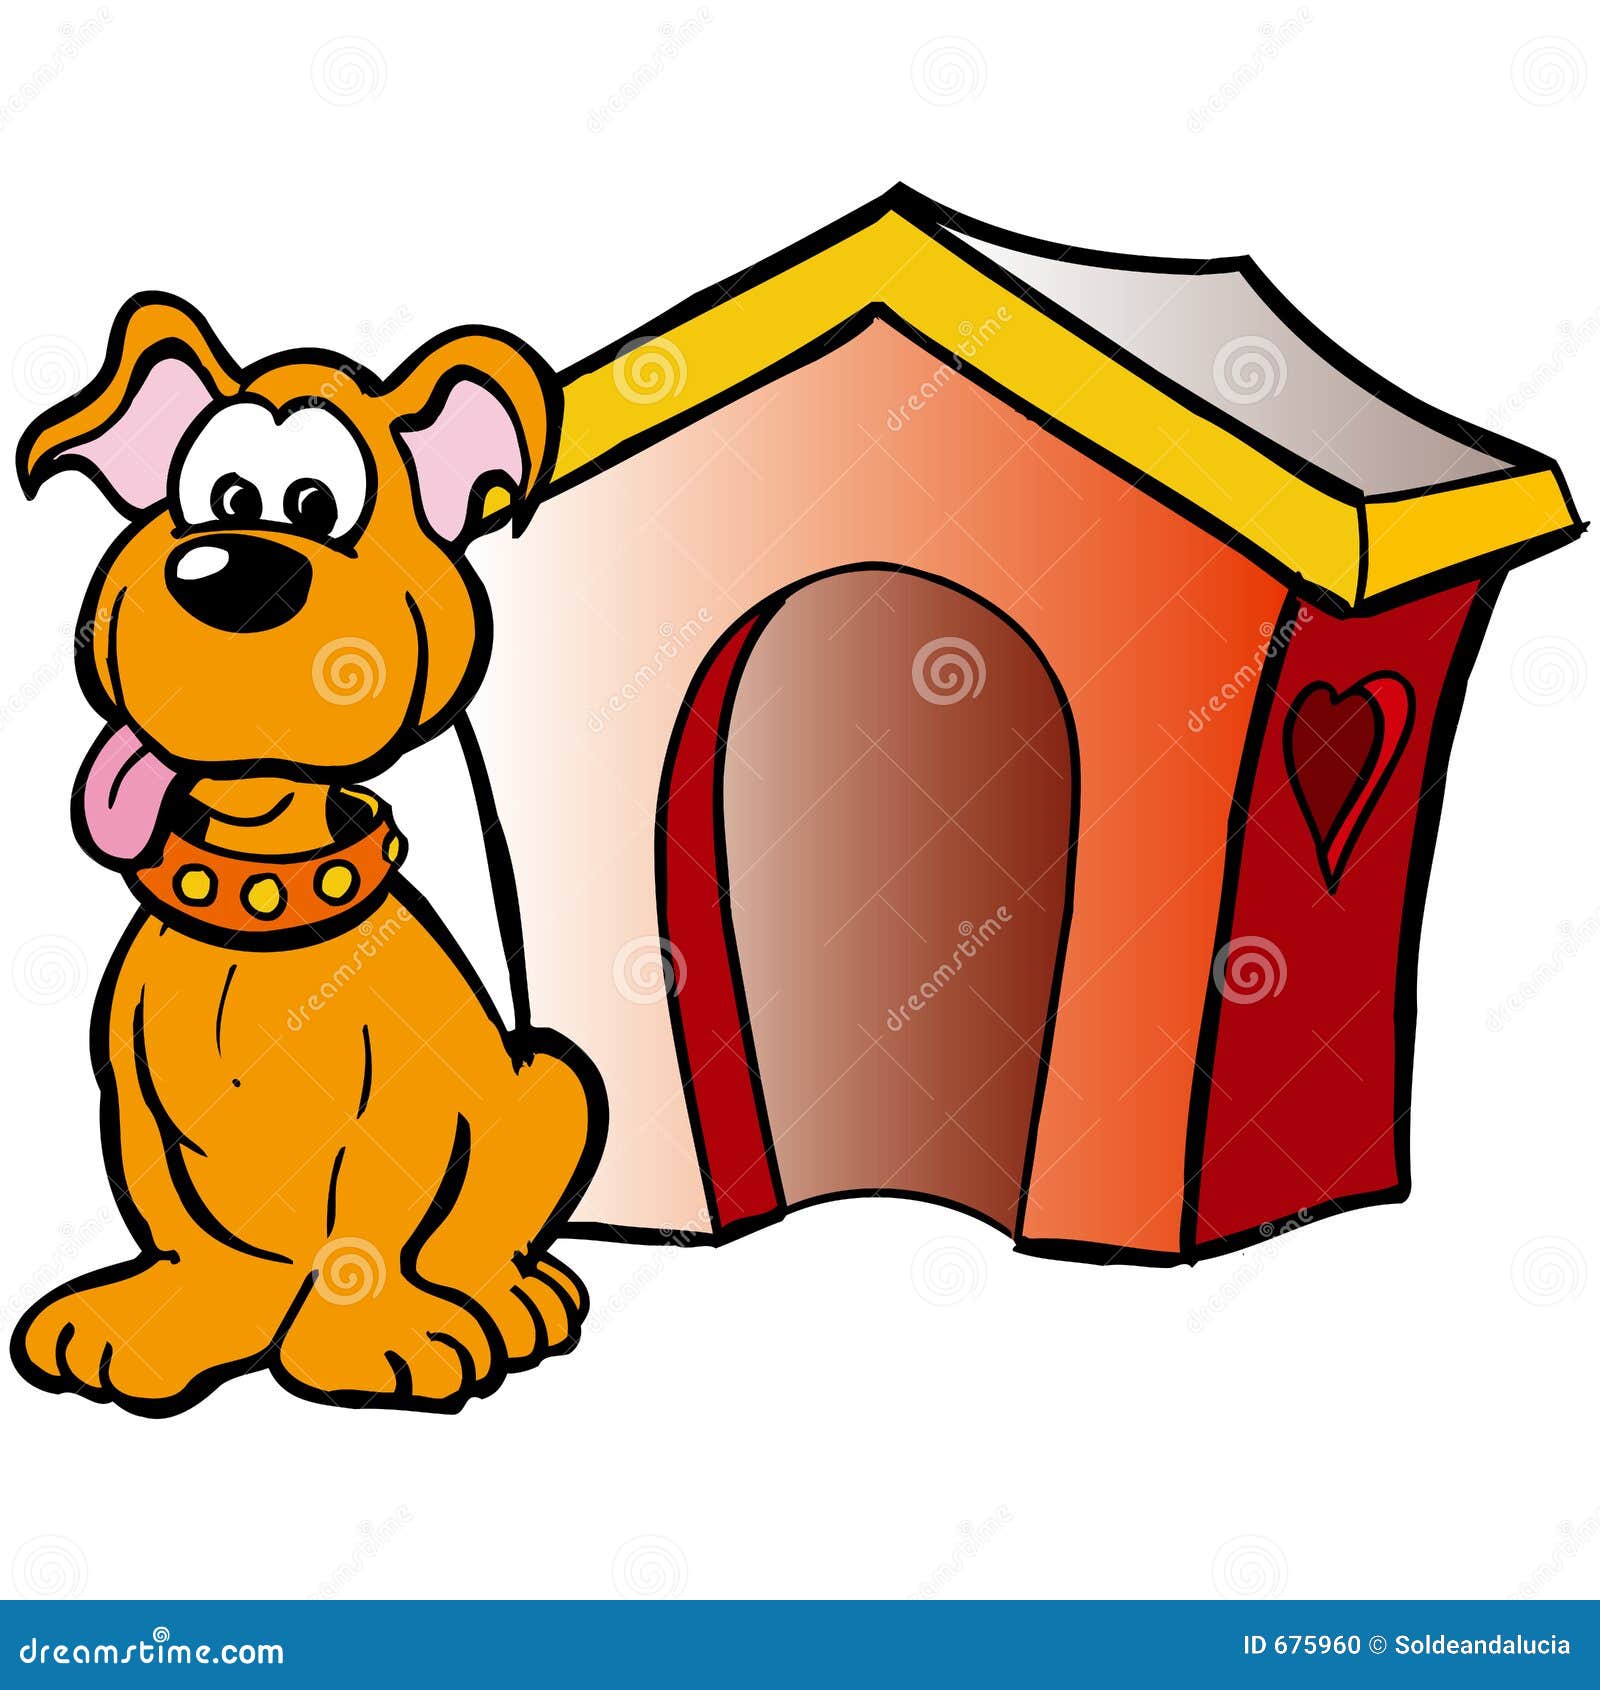 clipart dog house - photo #22